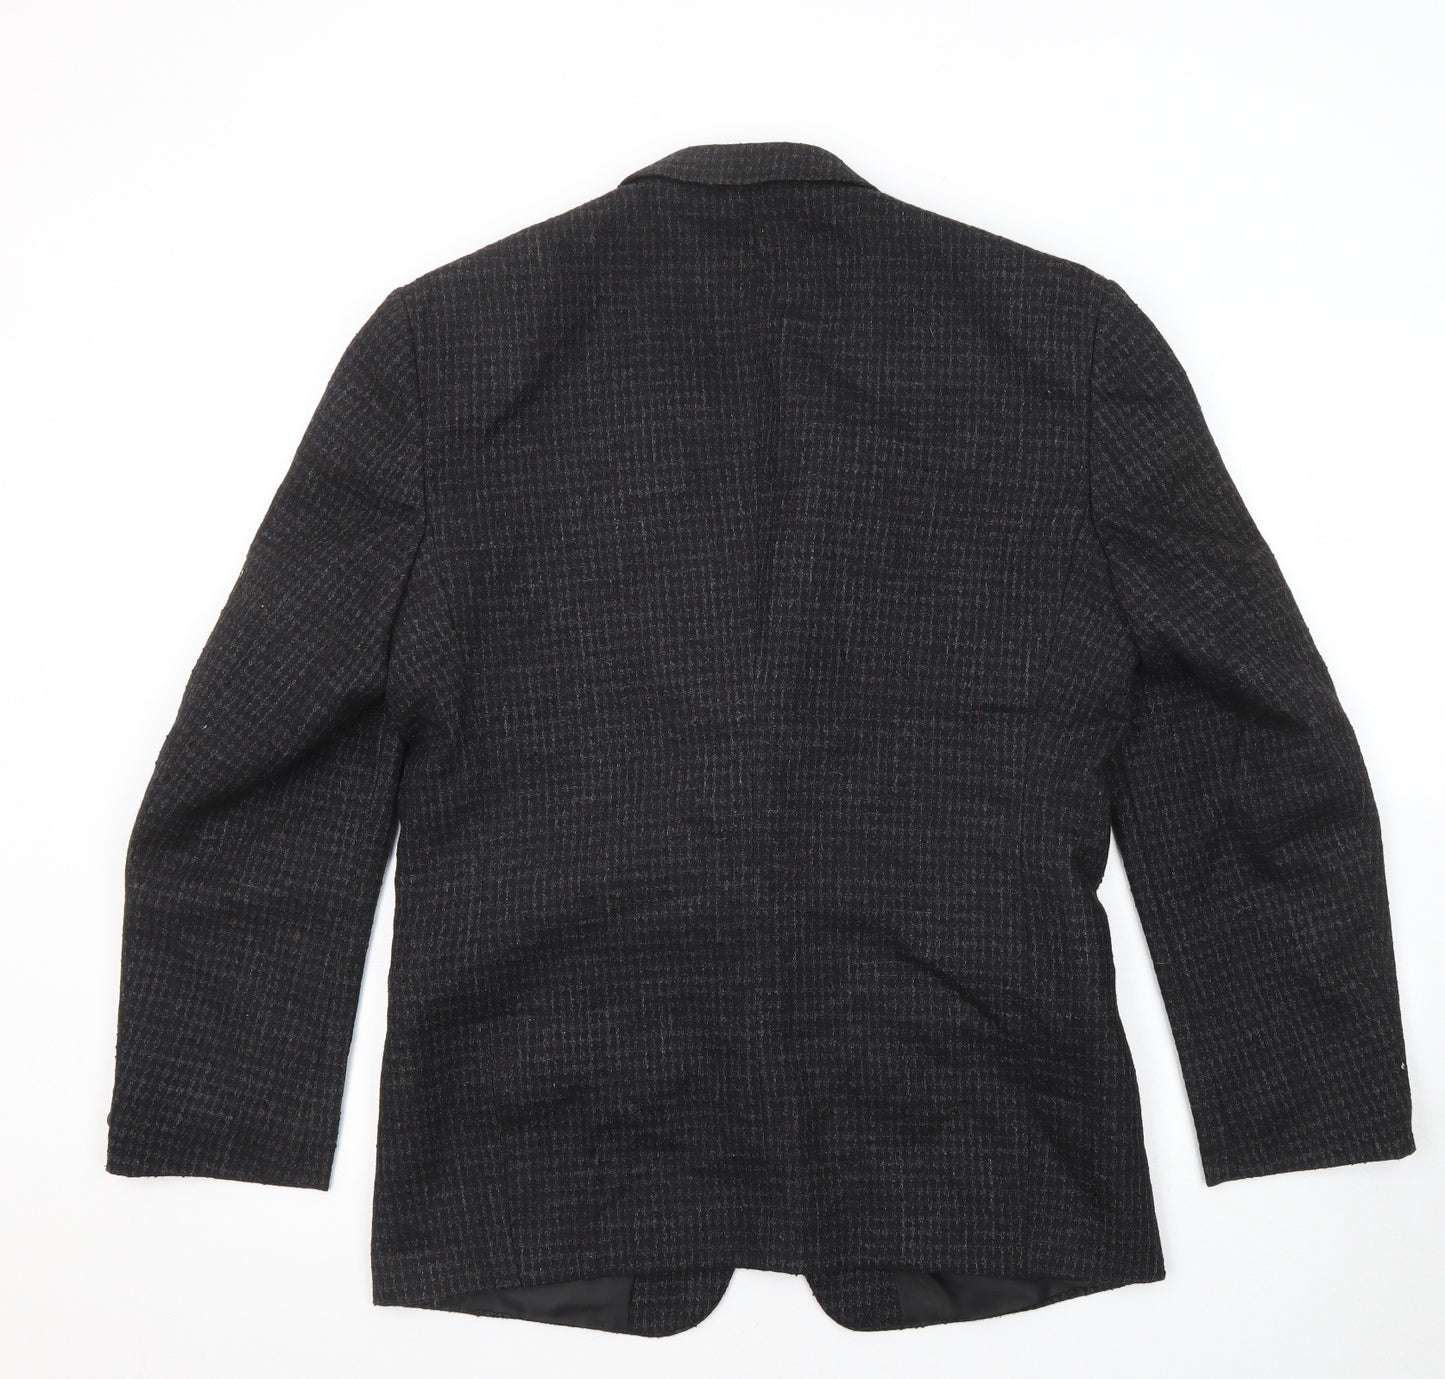 Nico Mens Black Geometric Wool Jacket Blazer Size 40 Regular